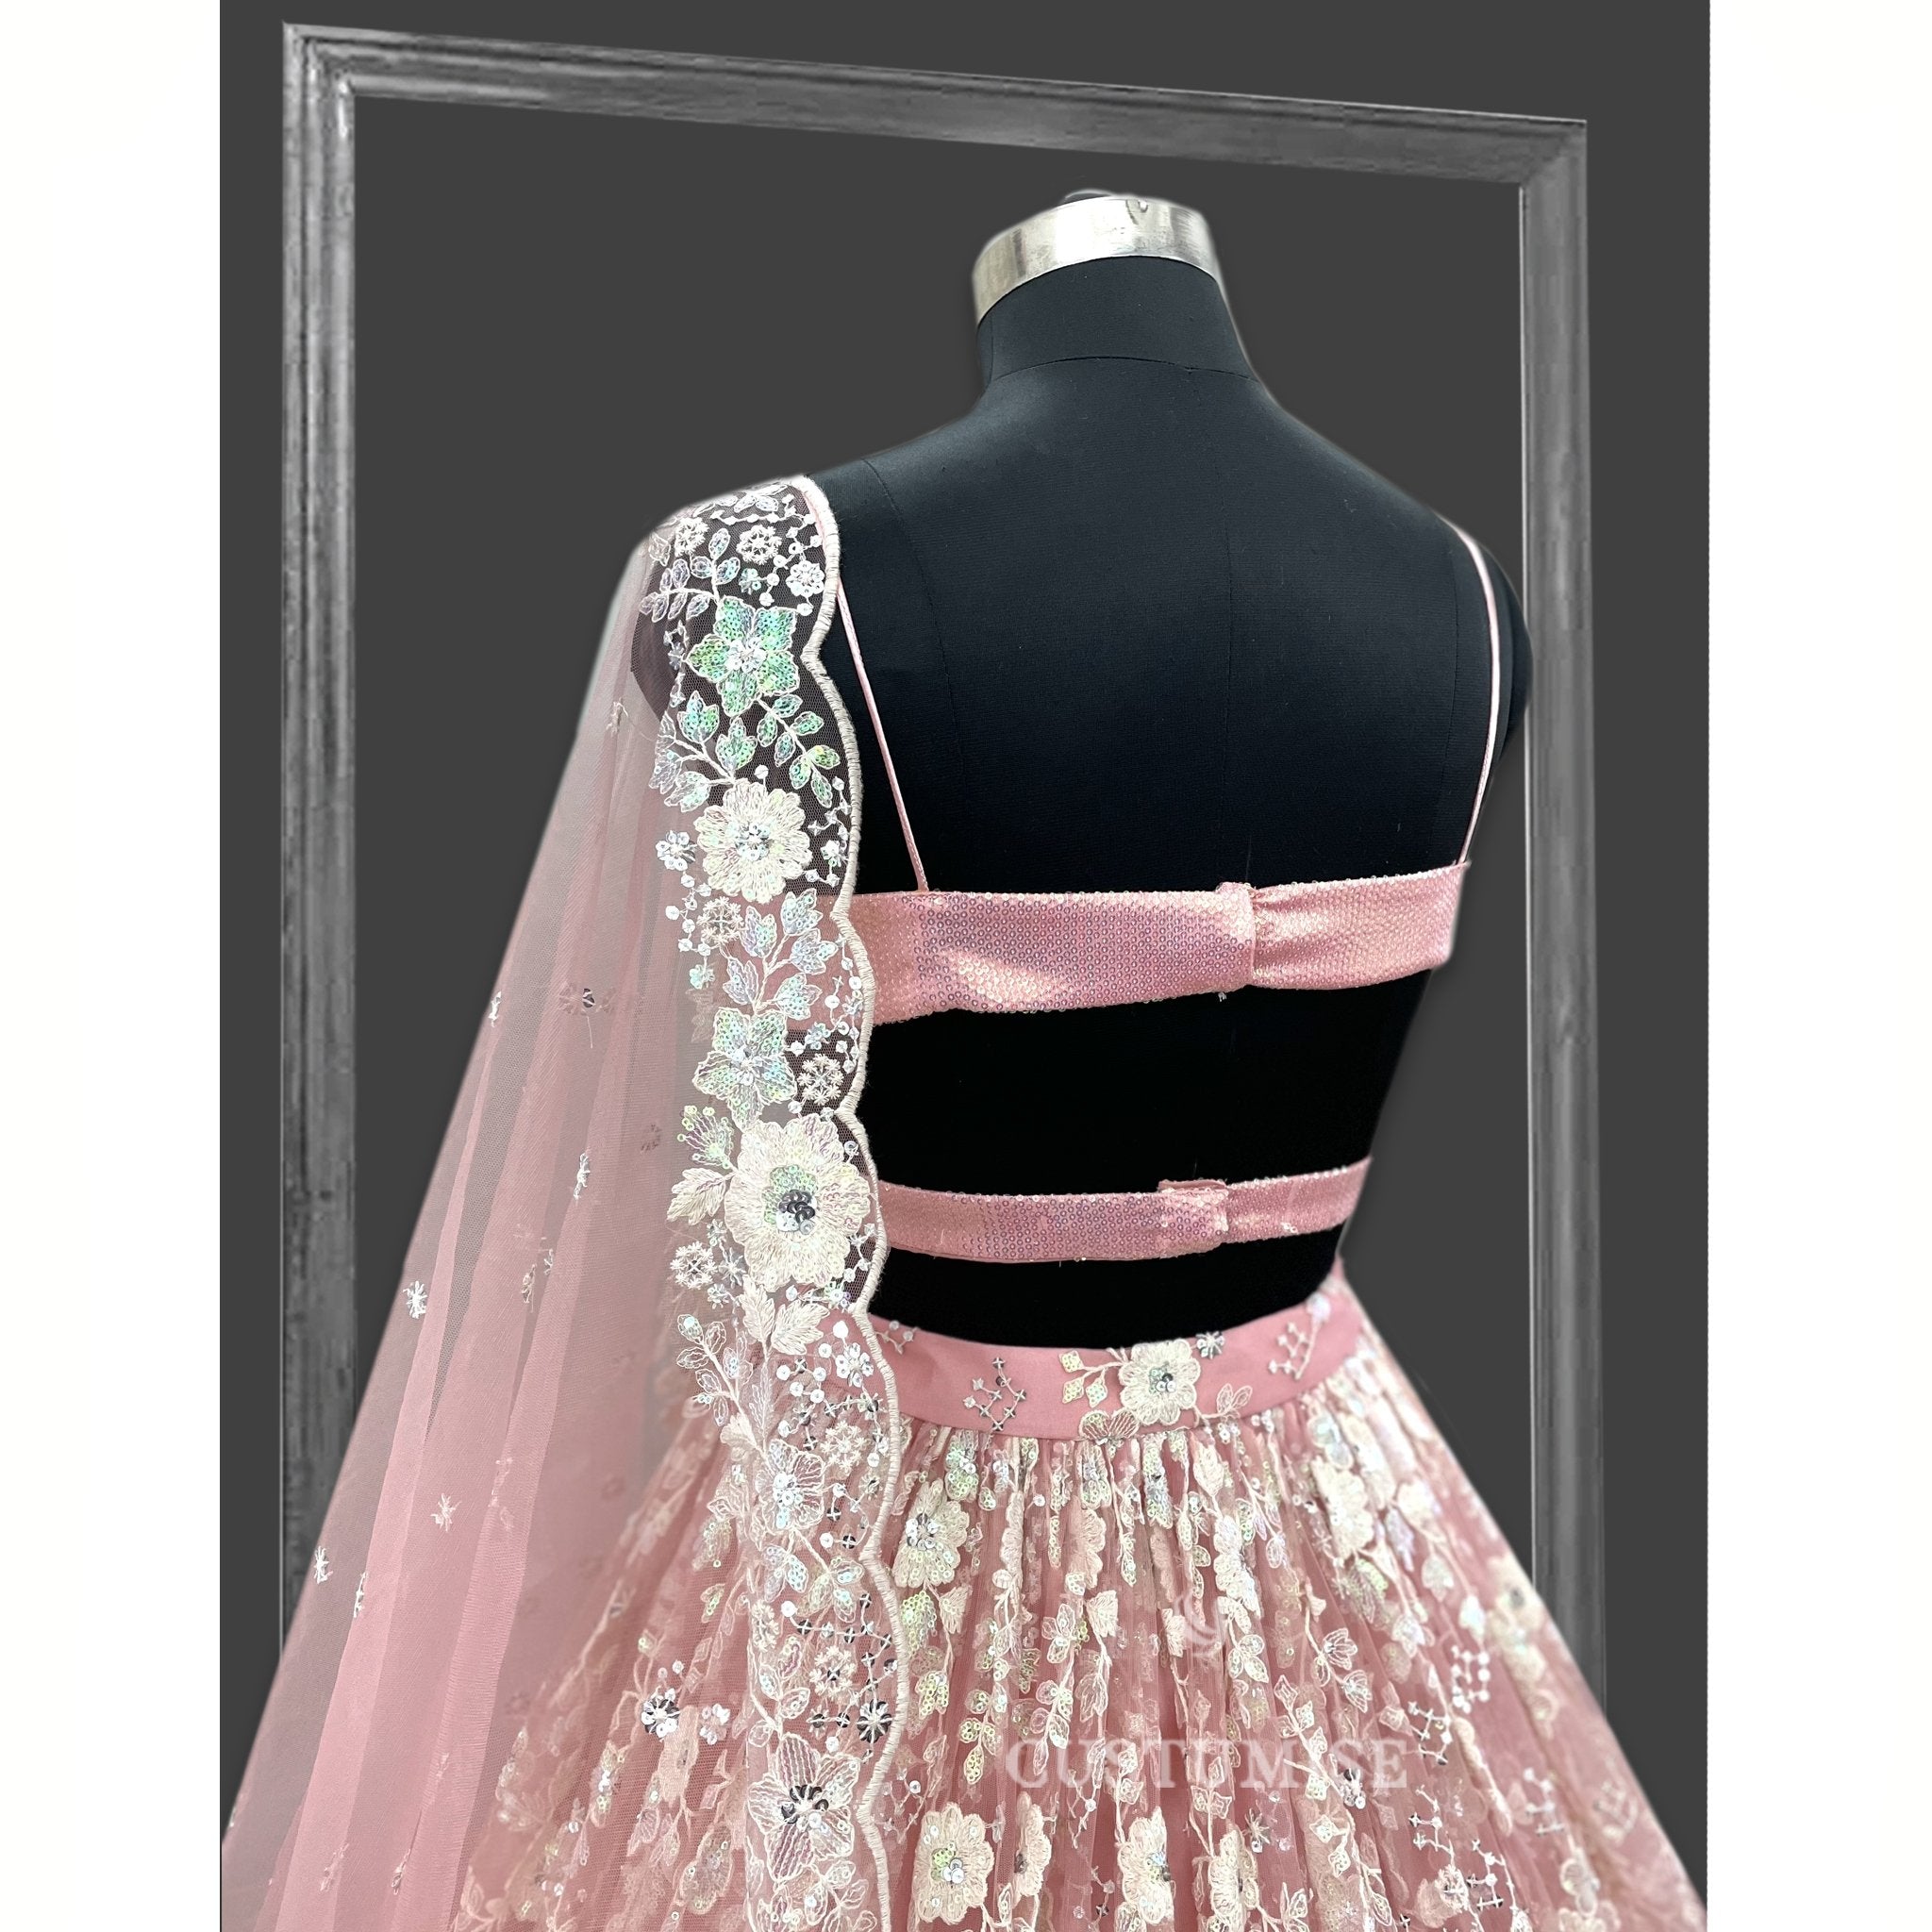 Pink floral sequenced lehenga Set - Indian Designer Bridal Wedding Outfit